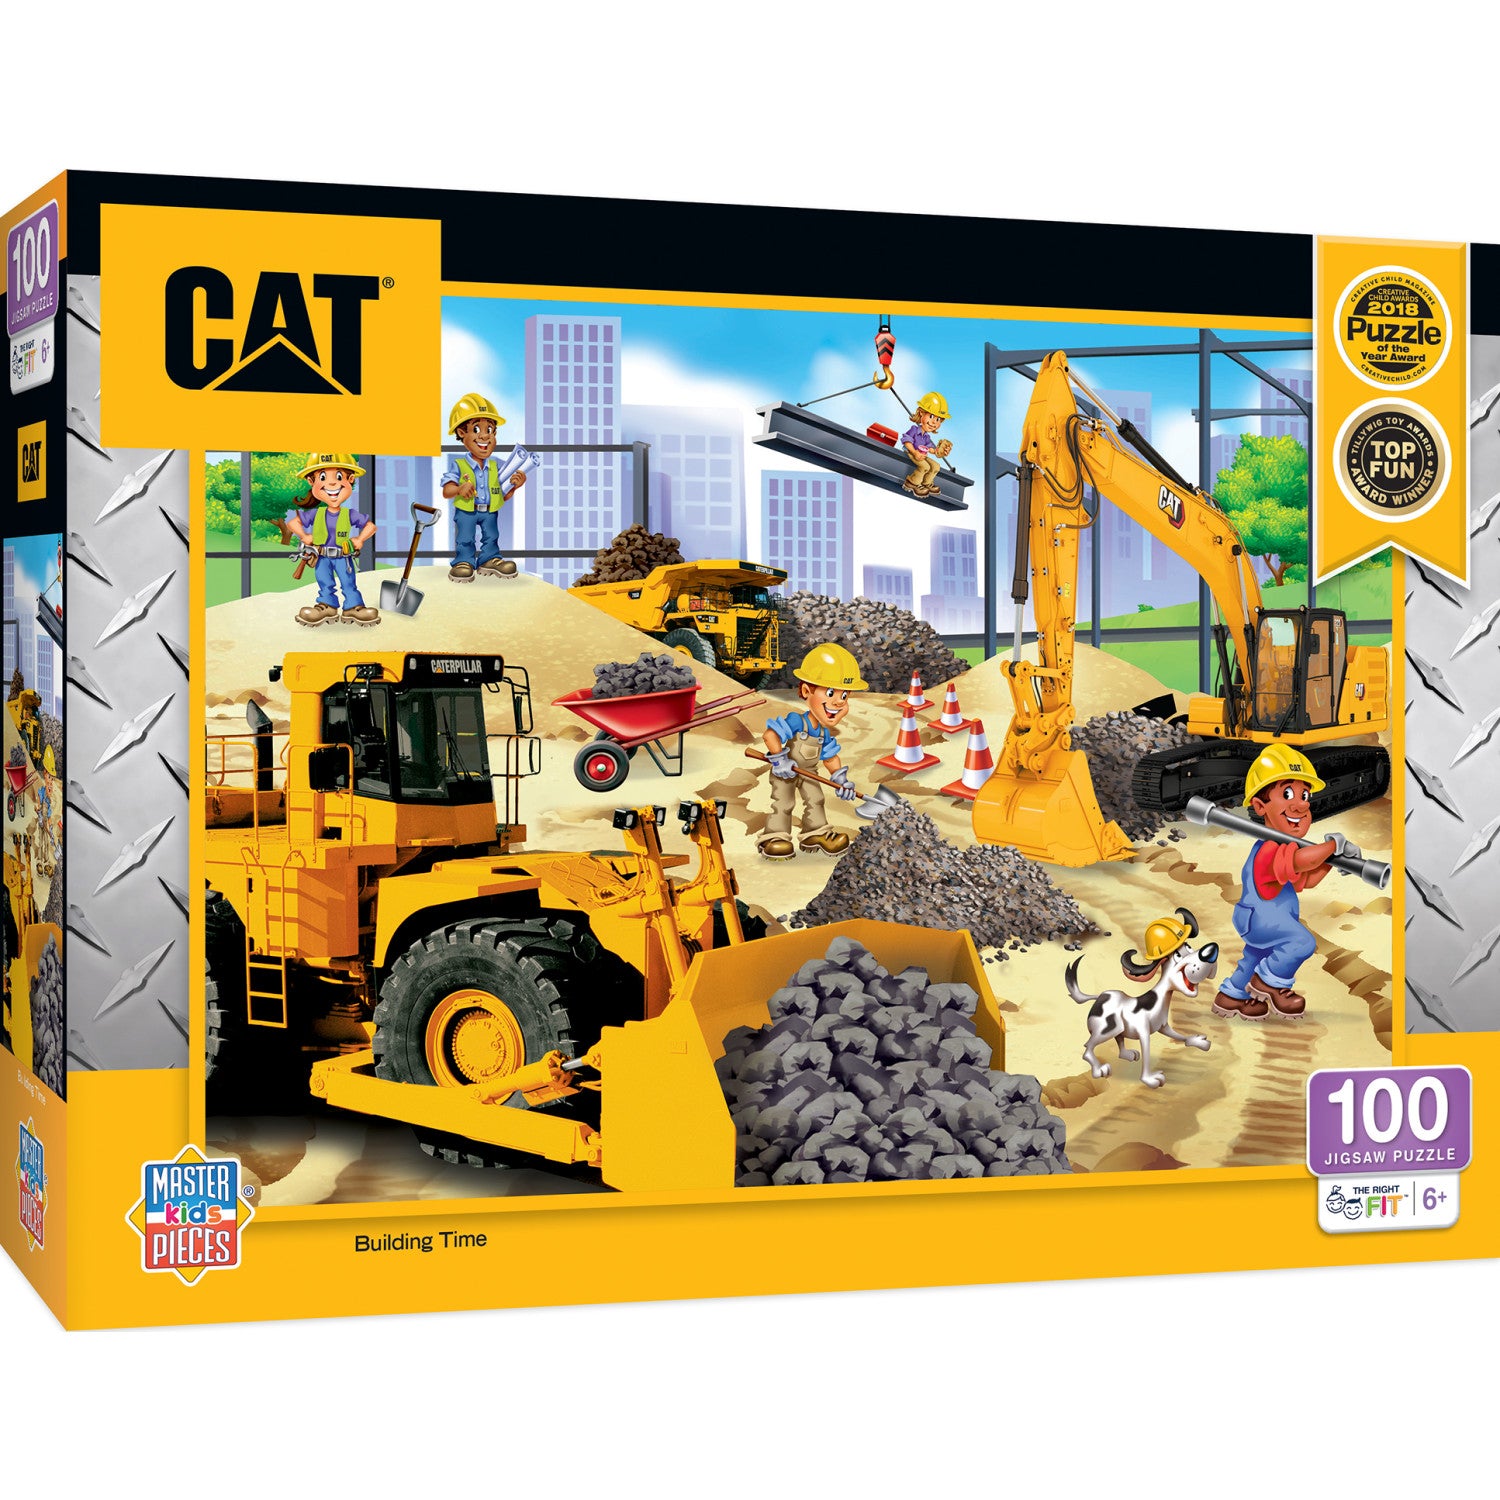 CAT - Building Time 100 Piece Jigsaw Puzzle